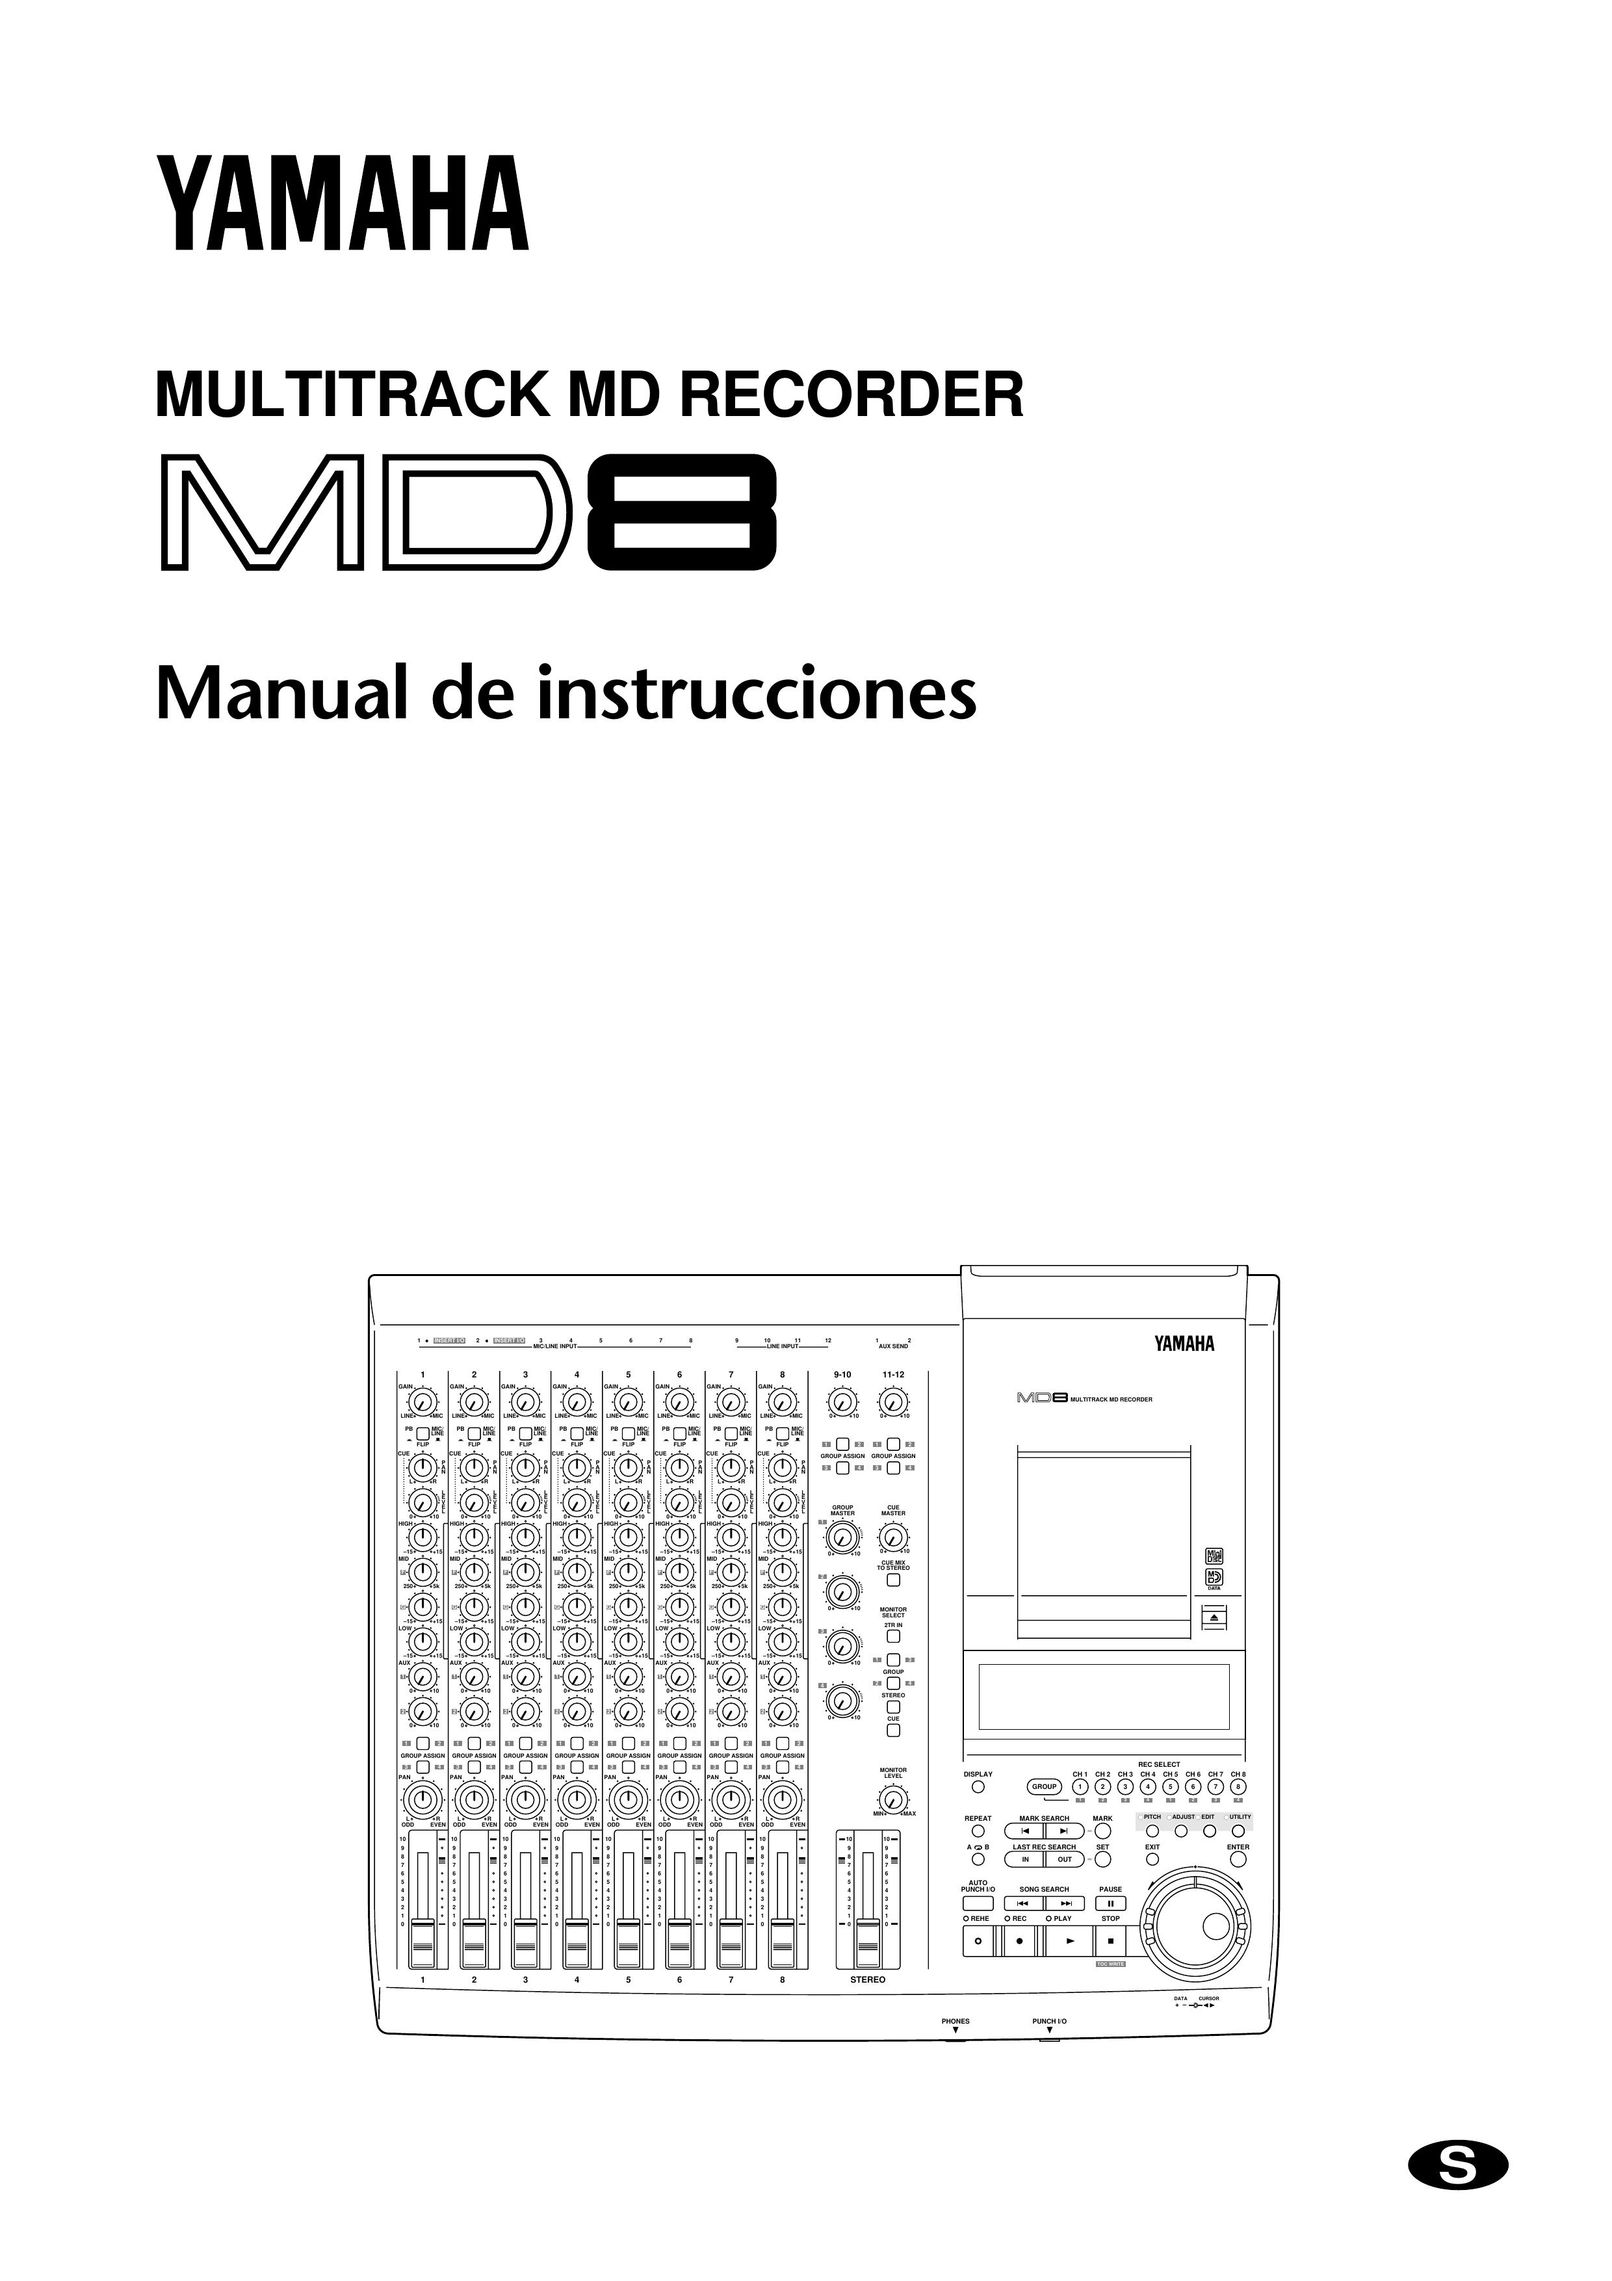 Yamaha MD8 Microcassette Recorder User Manual